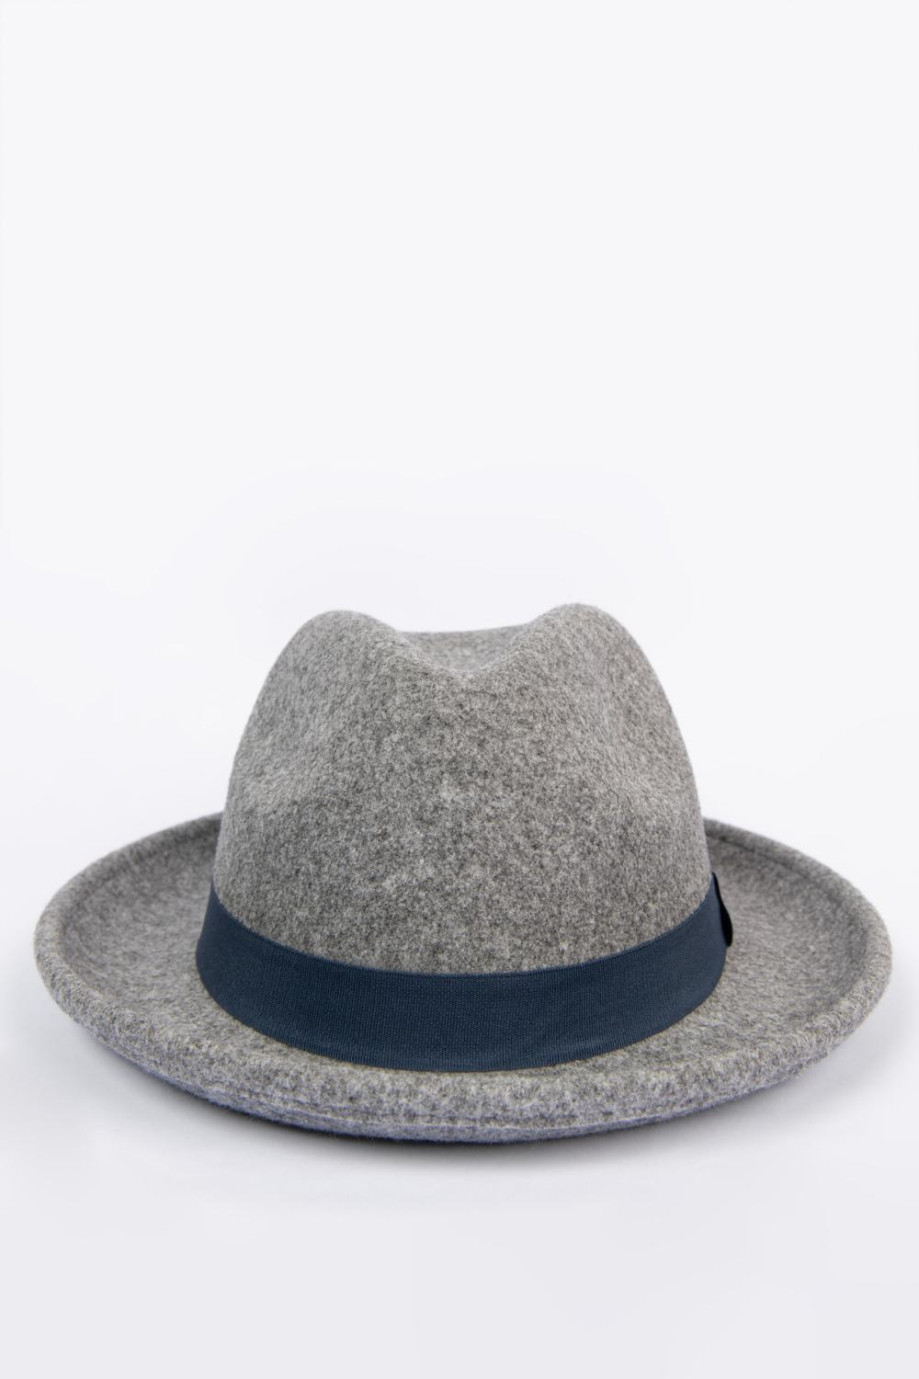 Sombrero tipo panama color café claro con cinta.